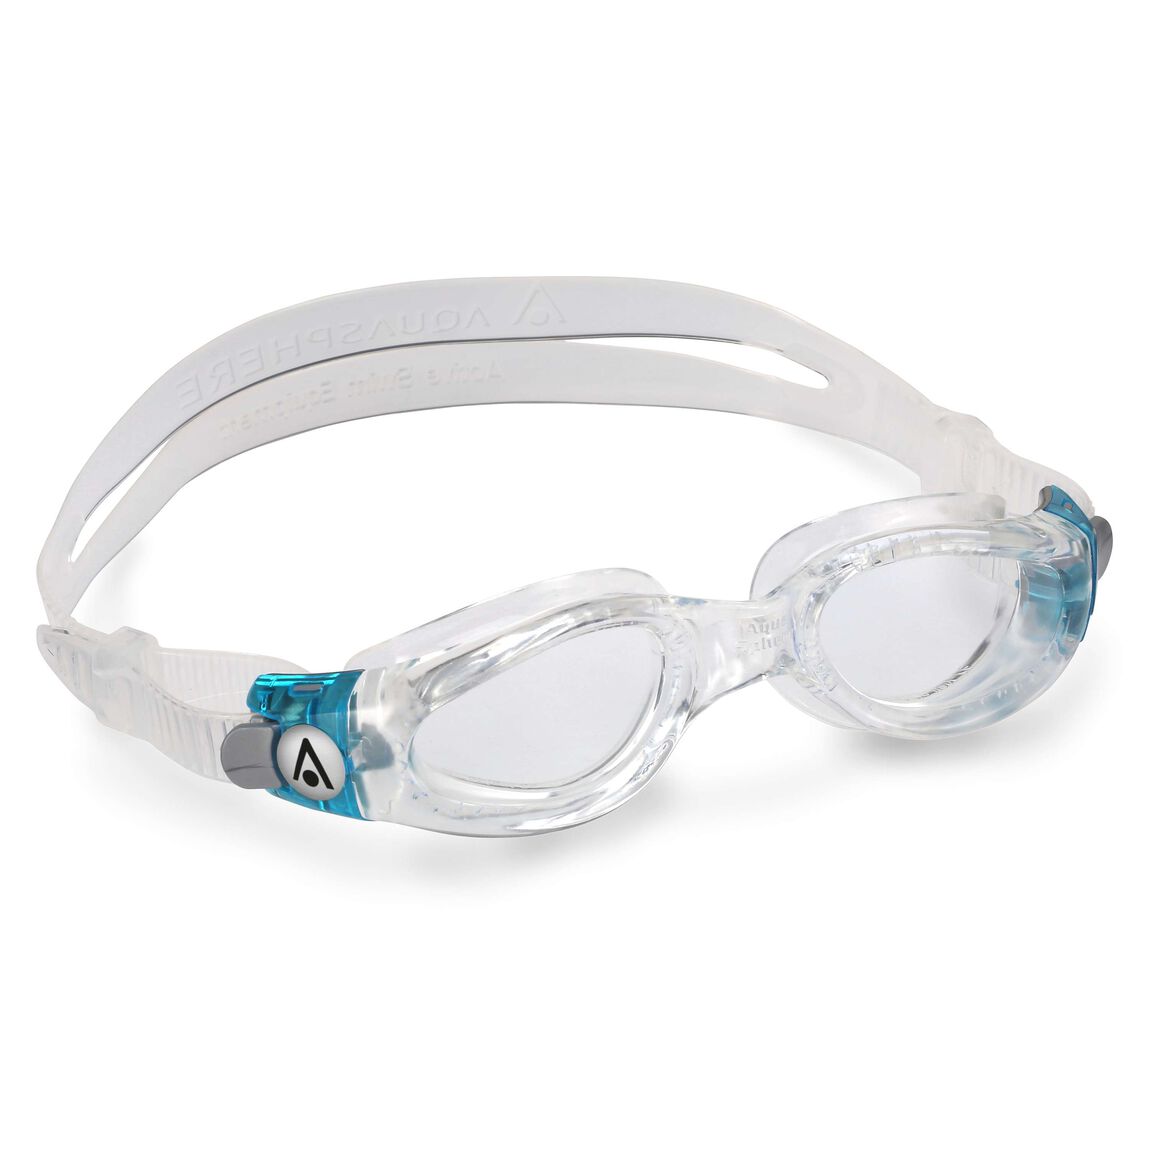 Aquasphere Kaiman Compact Swim Goggles - Transparent/Turquoise